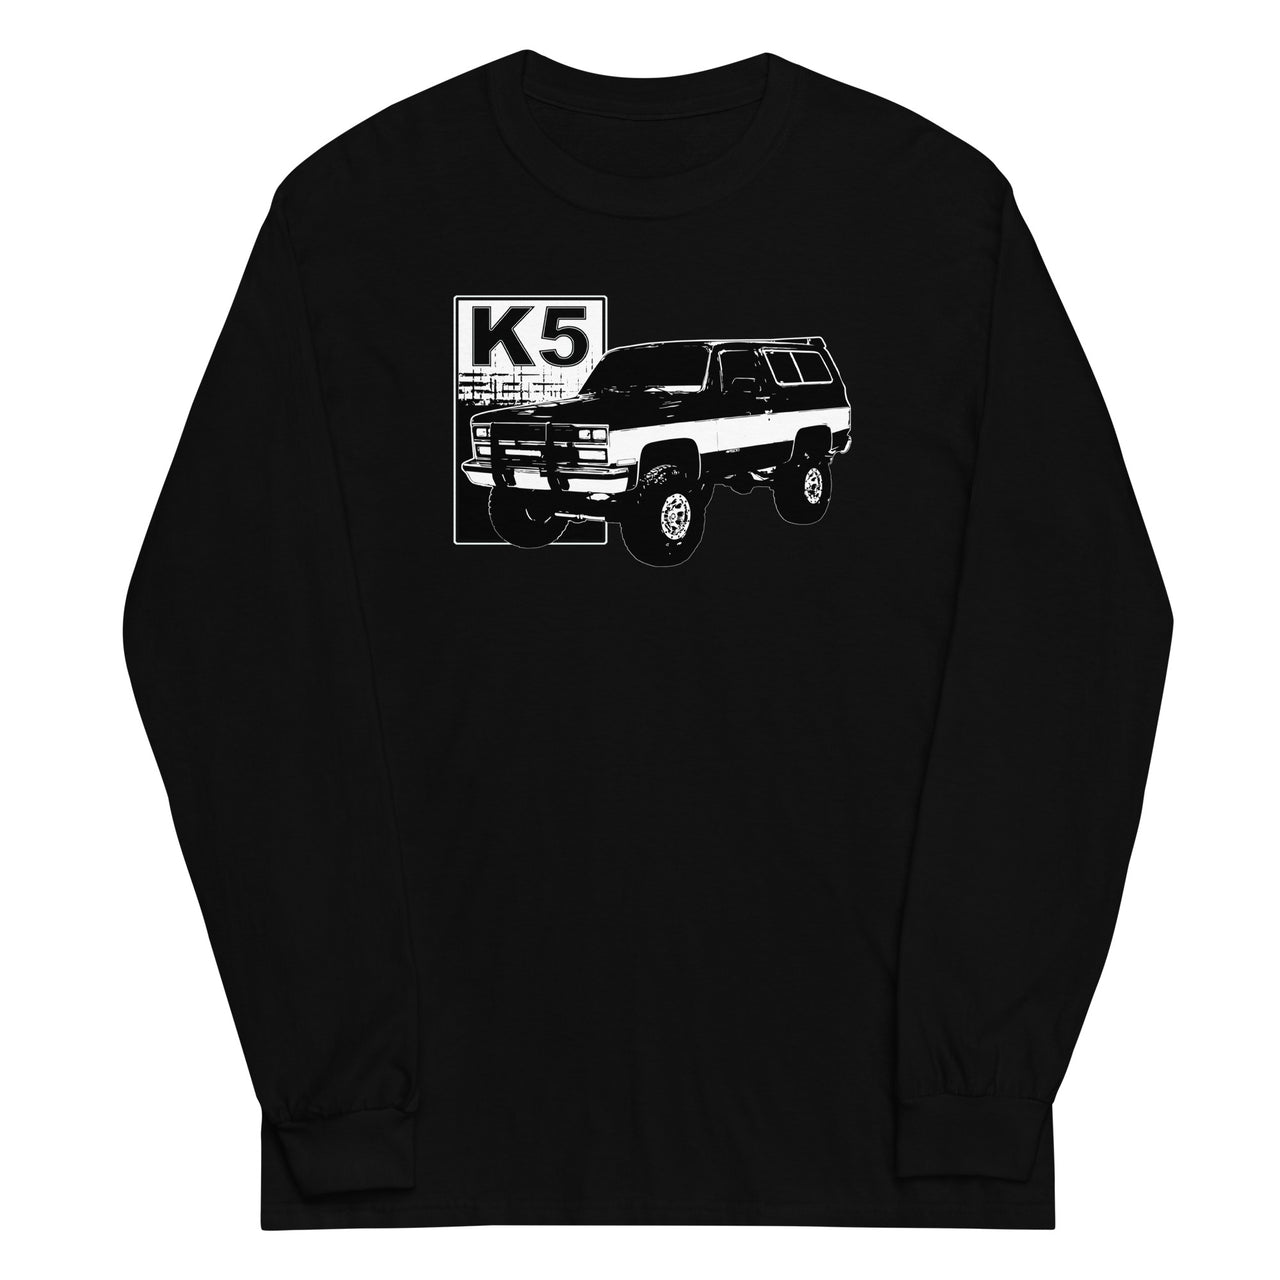 K5 Blazer Long Sleeve T-Shirt in black